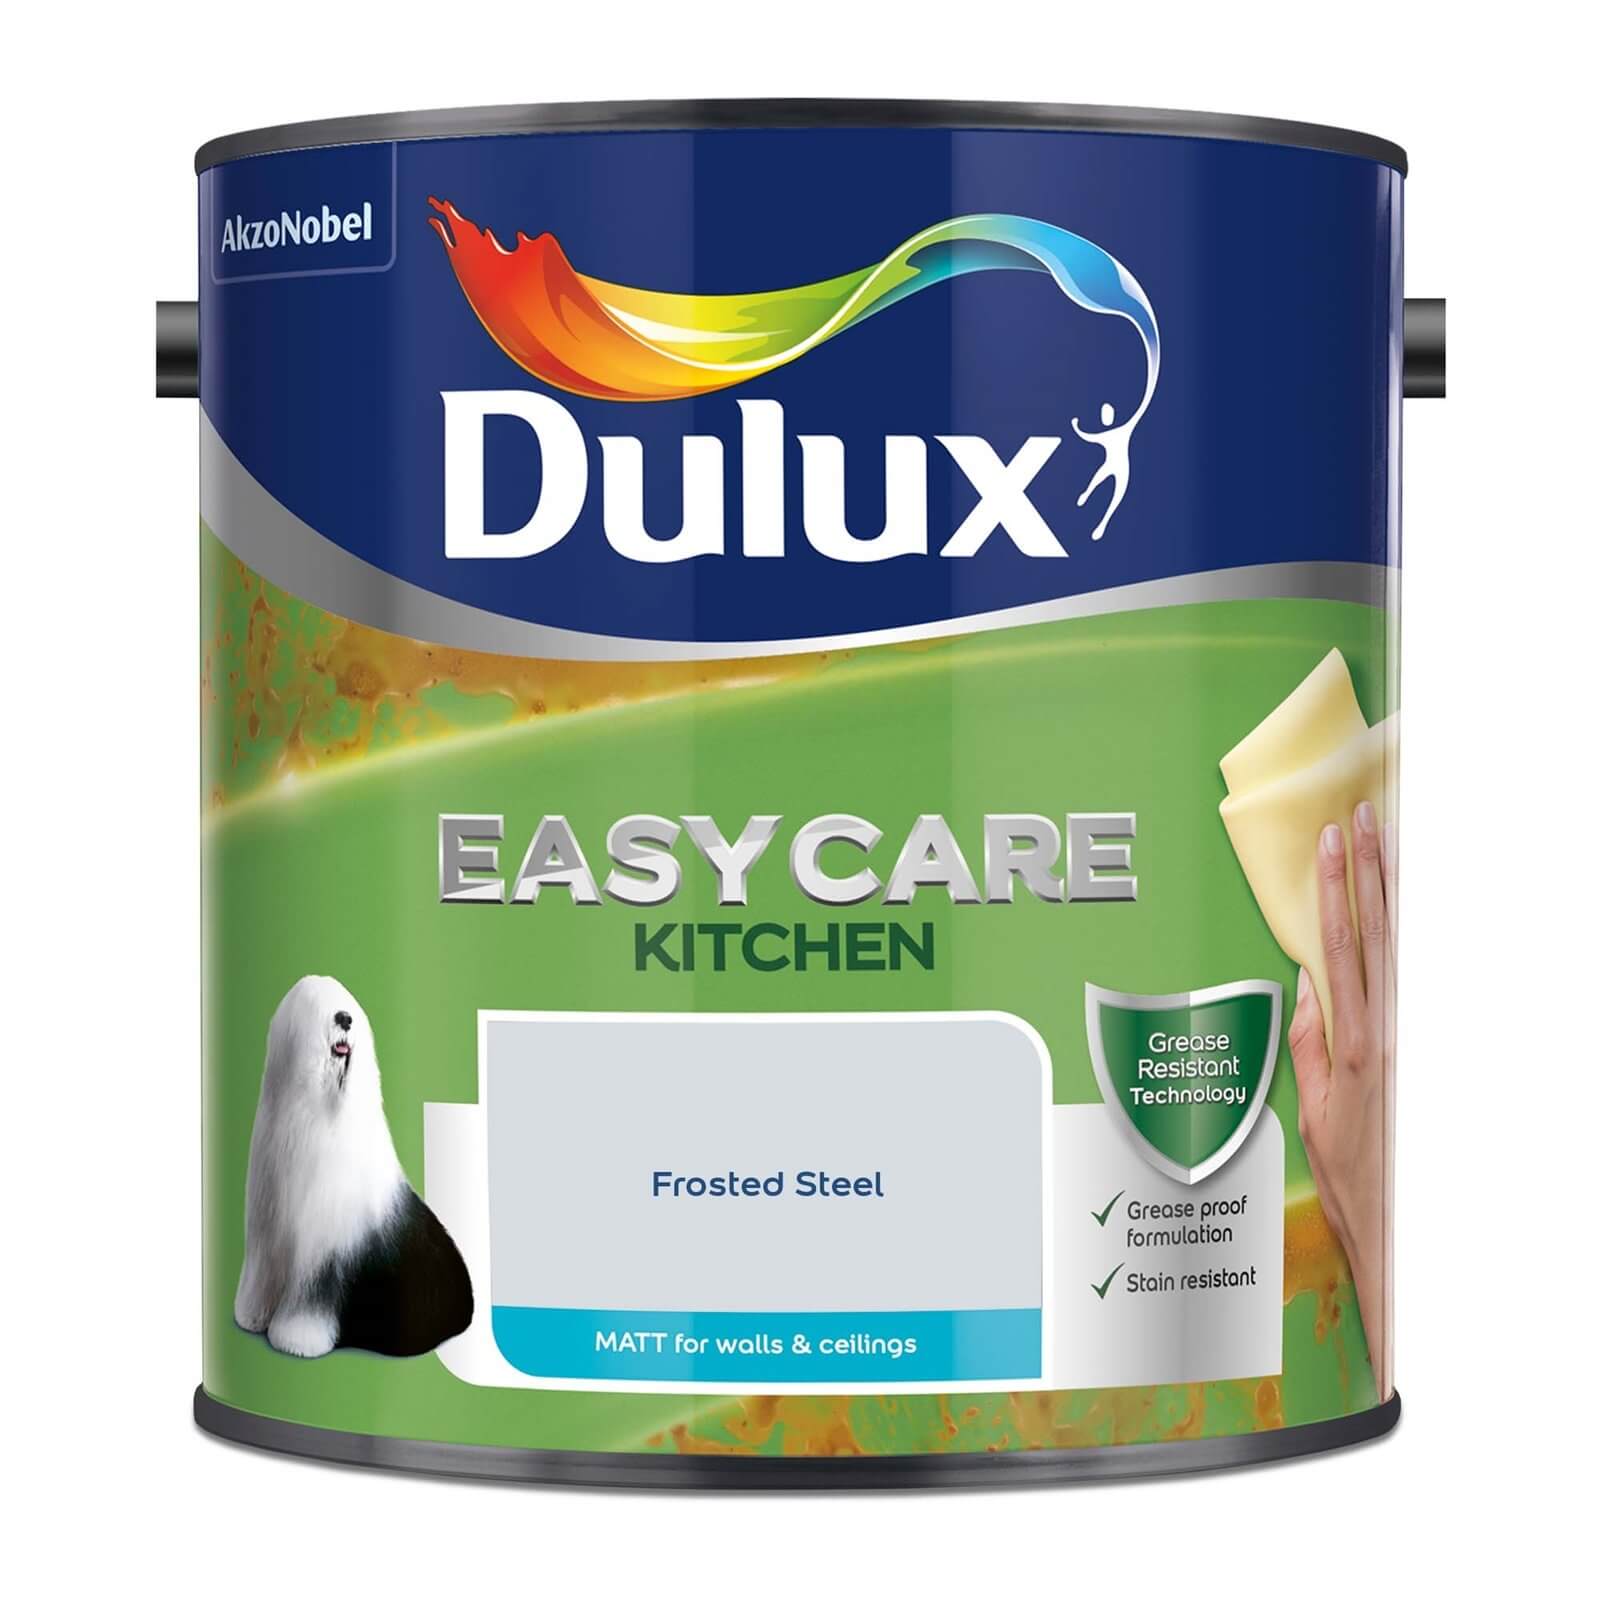 Dulux Easycare Kitchen Matt Emulsion Paint Frosted Steel - 2.5L